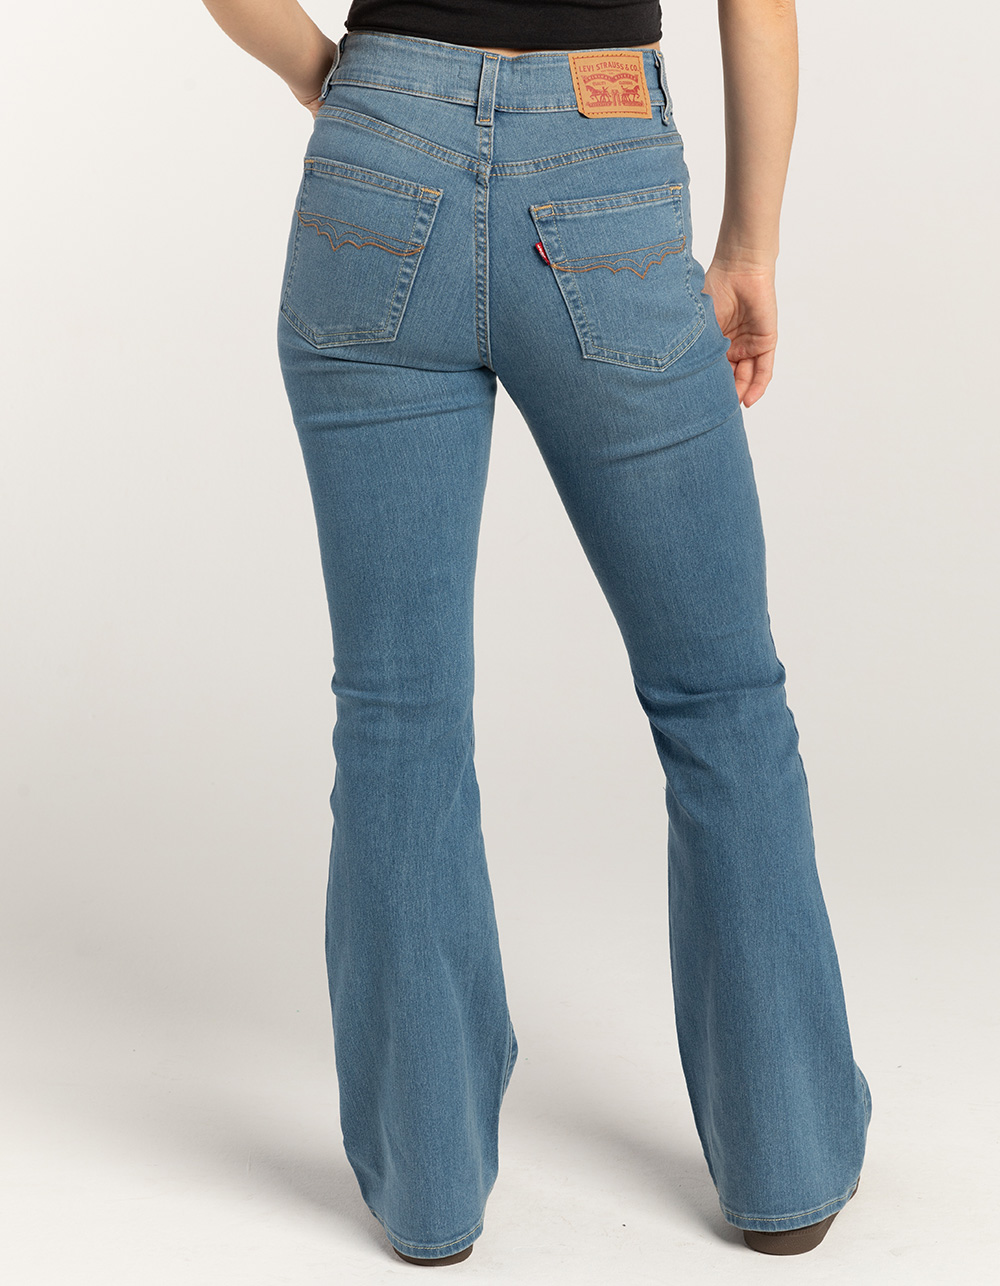 LEVI'S 726 Western Flare Womens Jeans - Camp Denim - MEDIUM STONE | Tillys